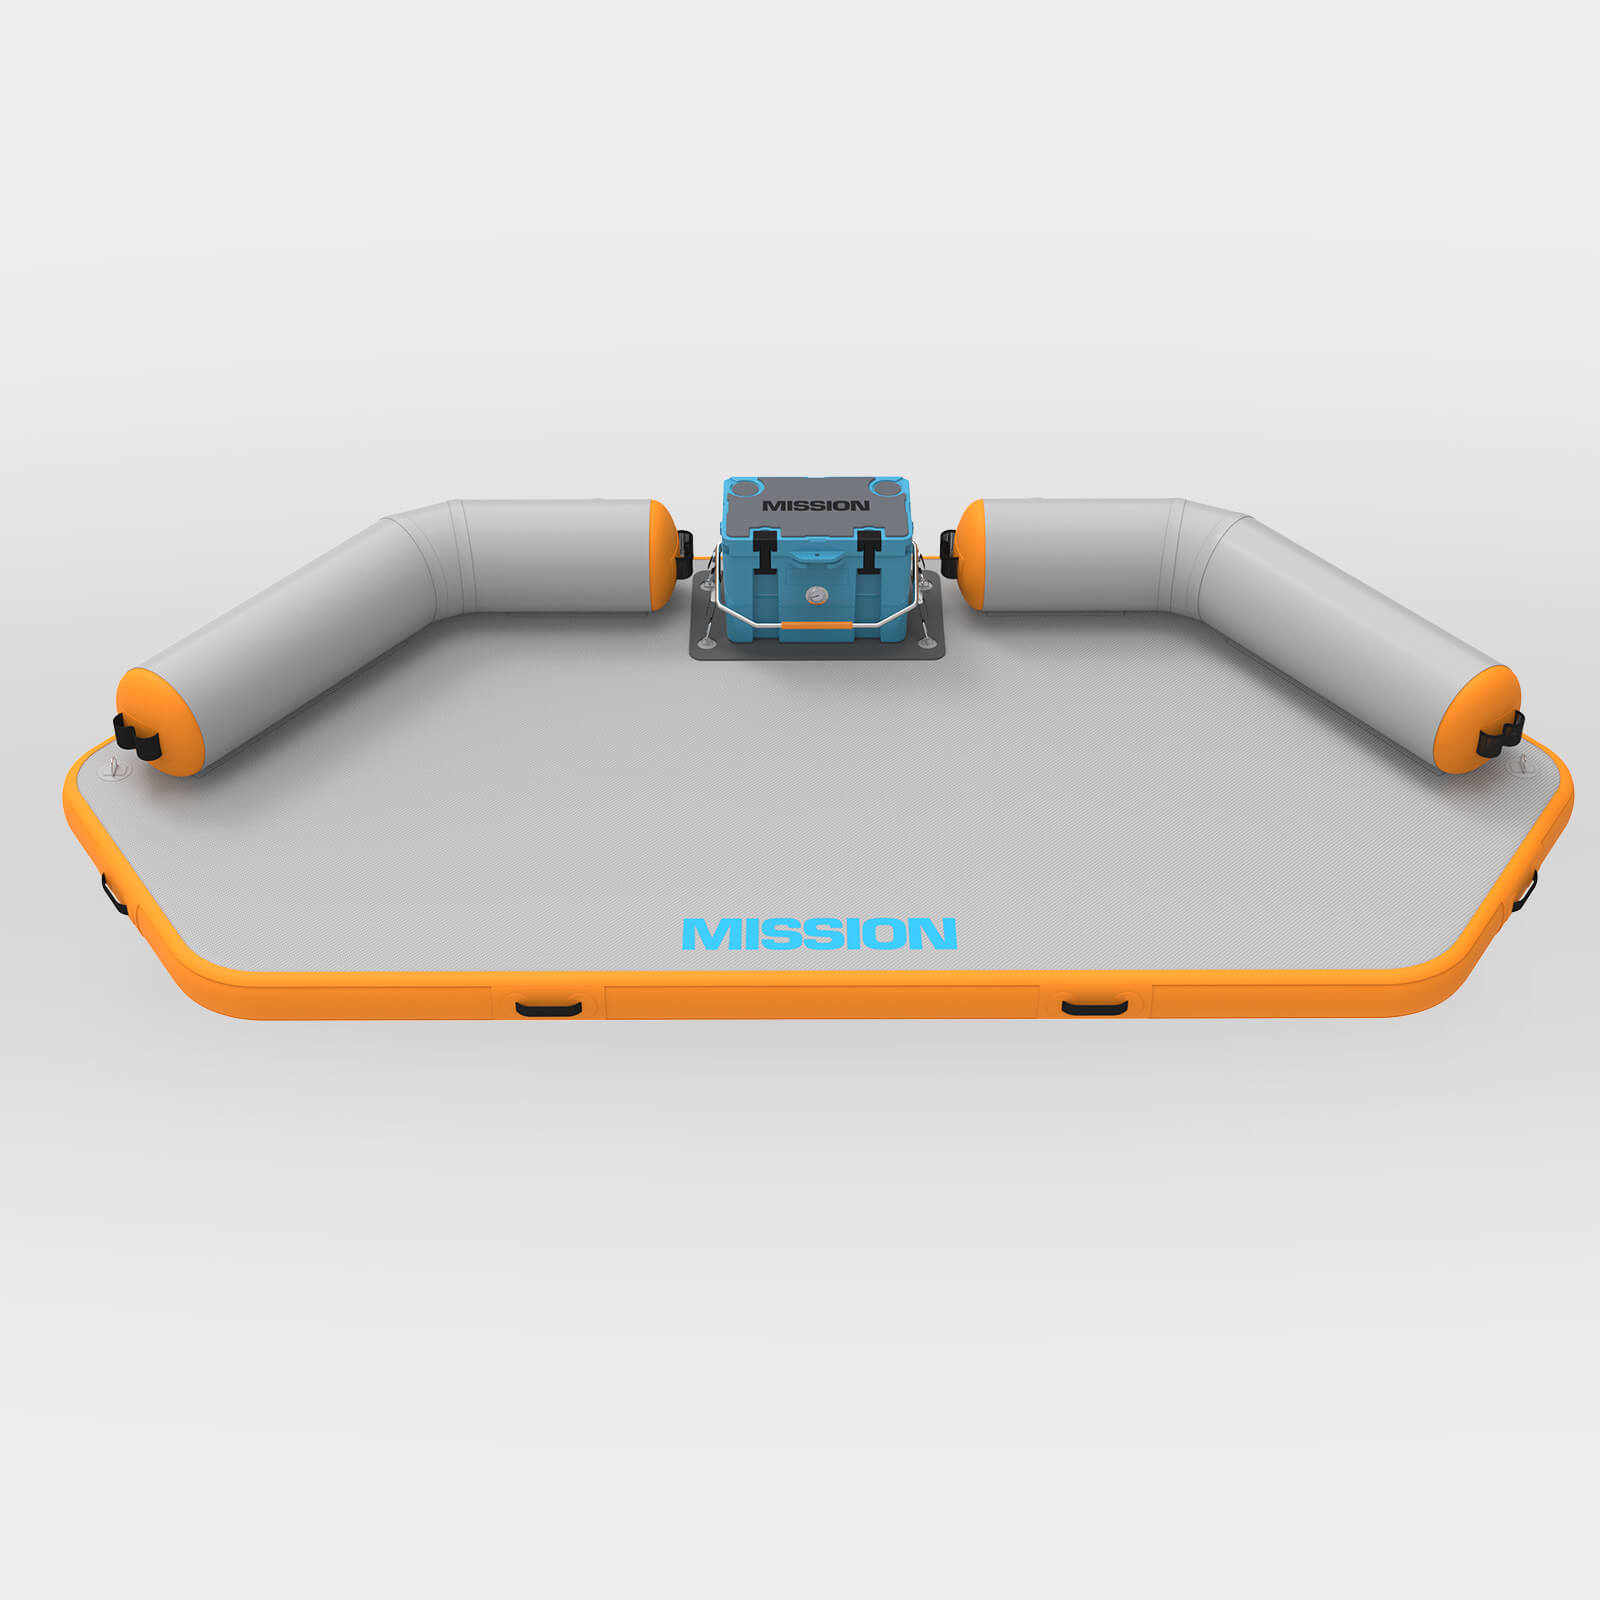 REEF DECK | Inflatable Swim Platform + Lounger